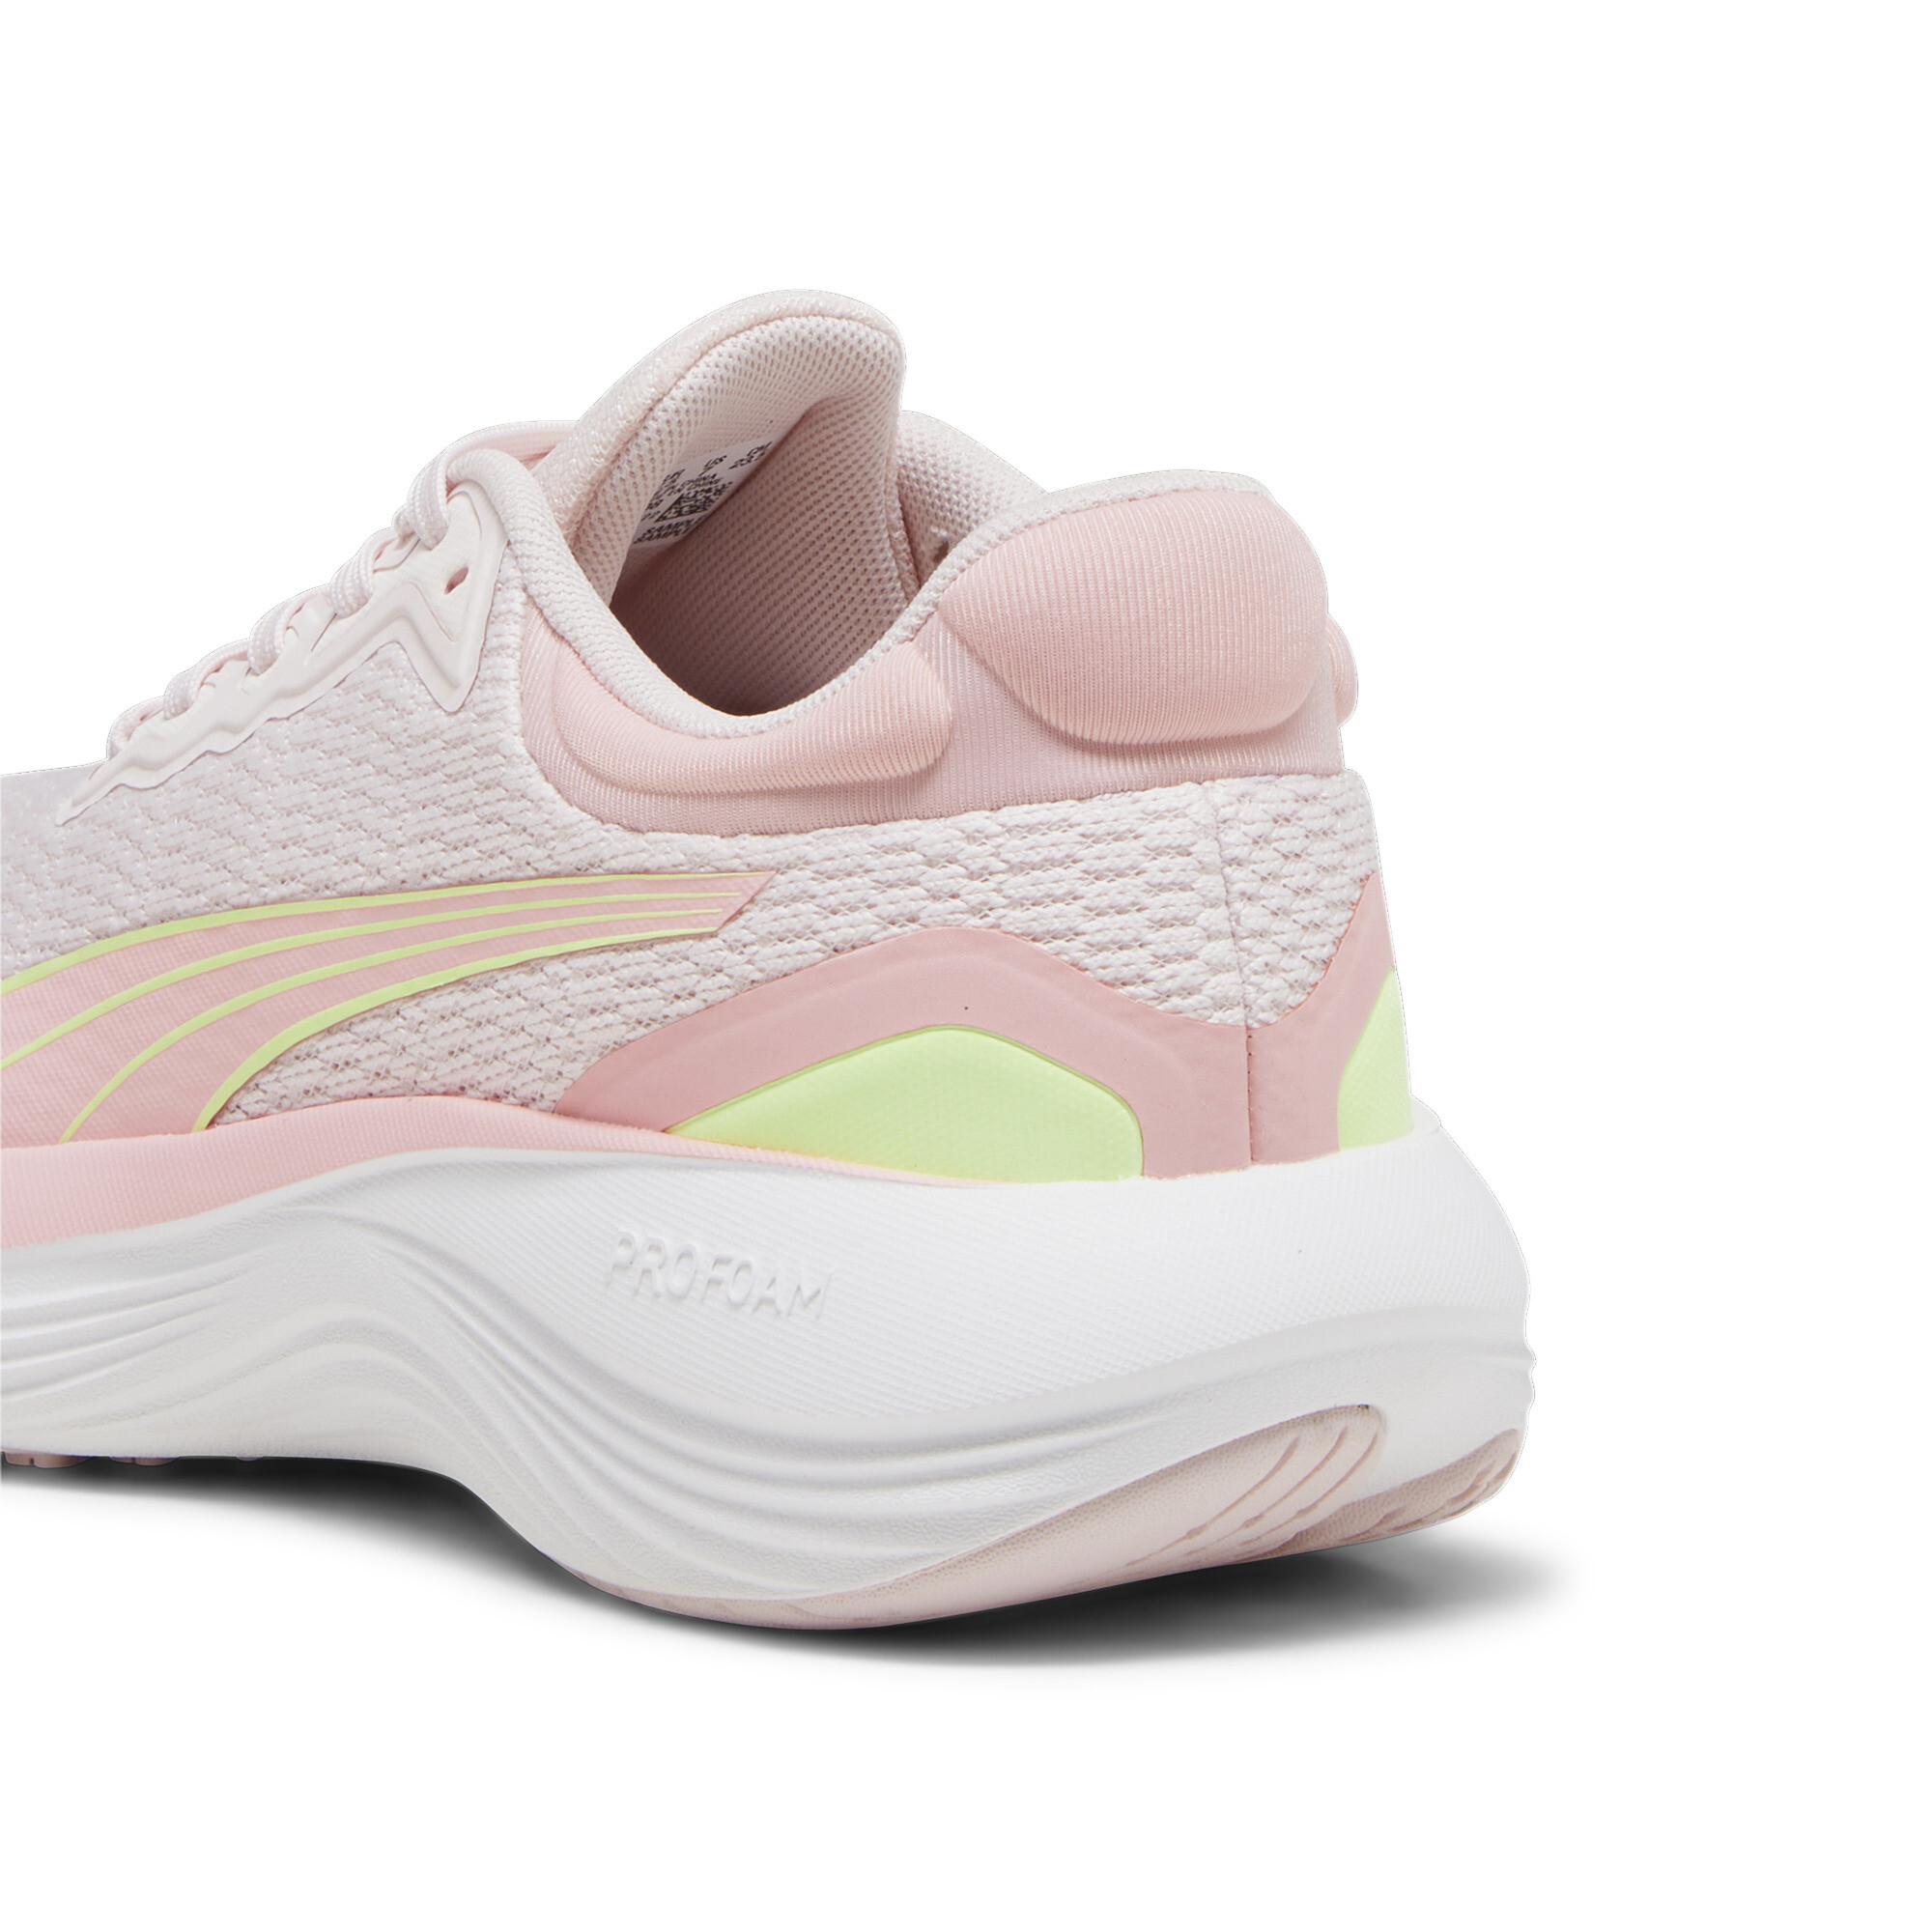 Men's PUMA Scend Pro Running Shoes In Pink, Size EU 37.5